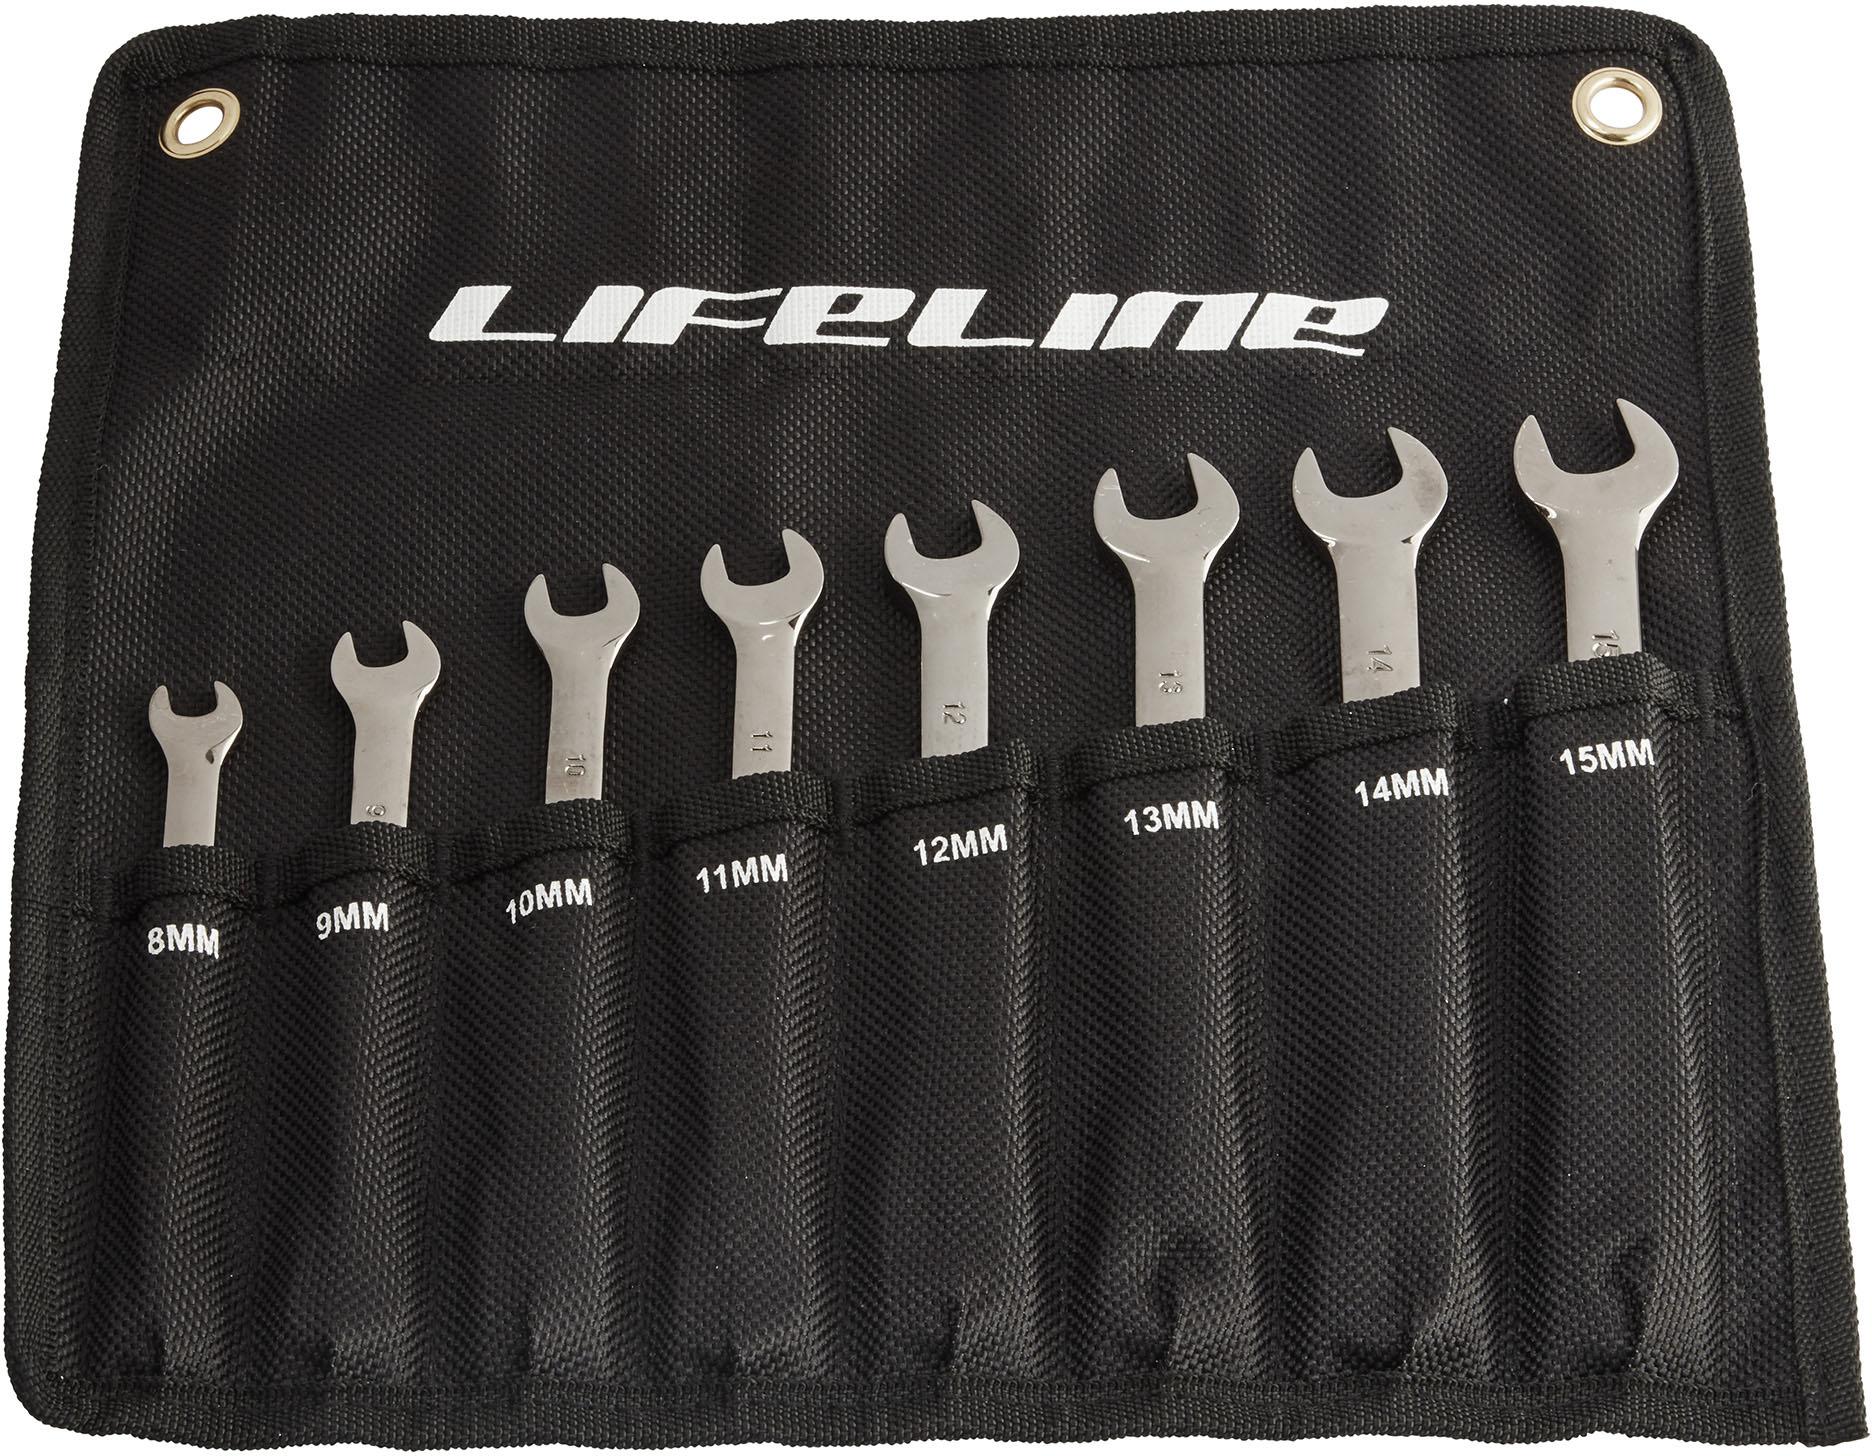 Lifeline Crv Ratchet Wrenches  Black